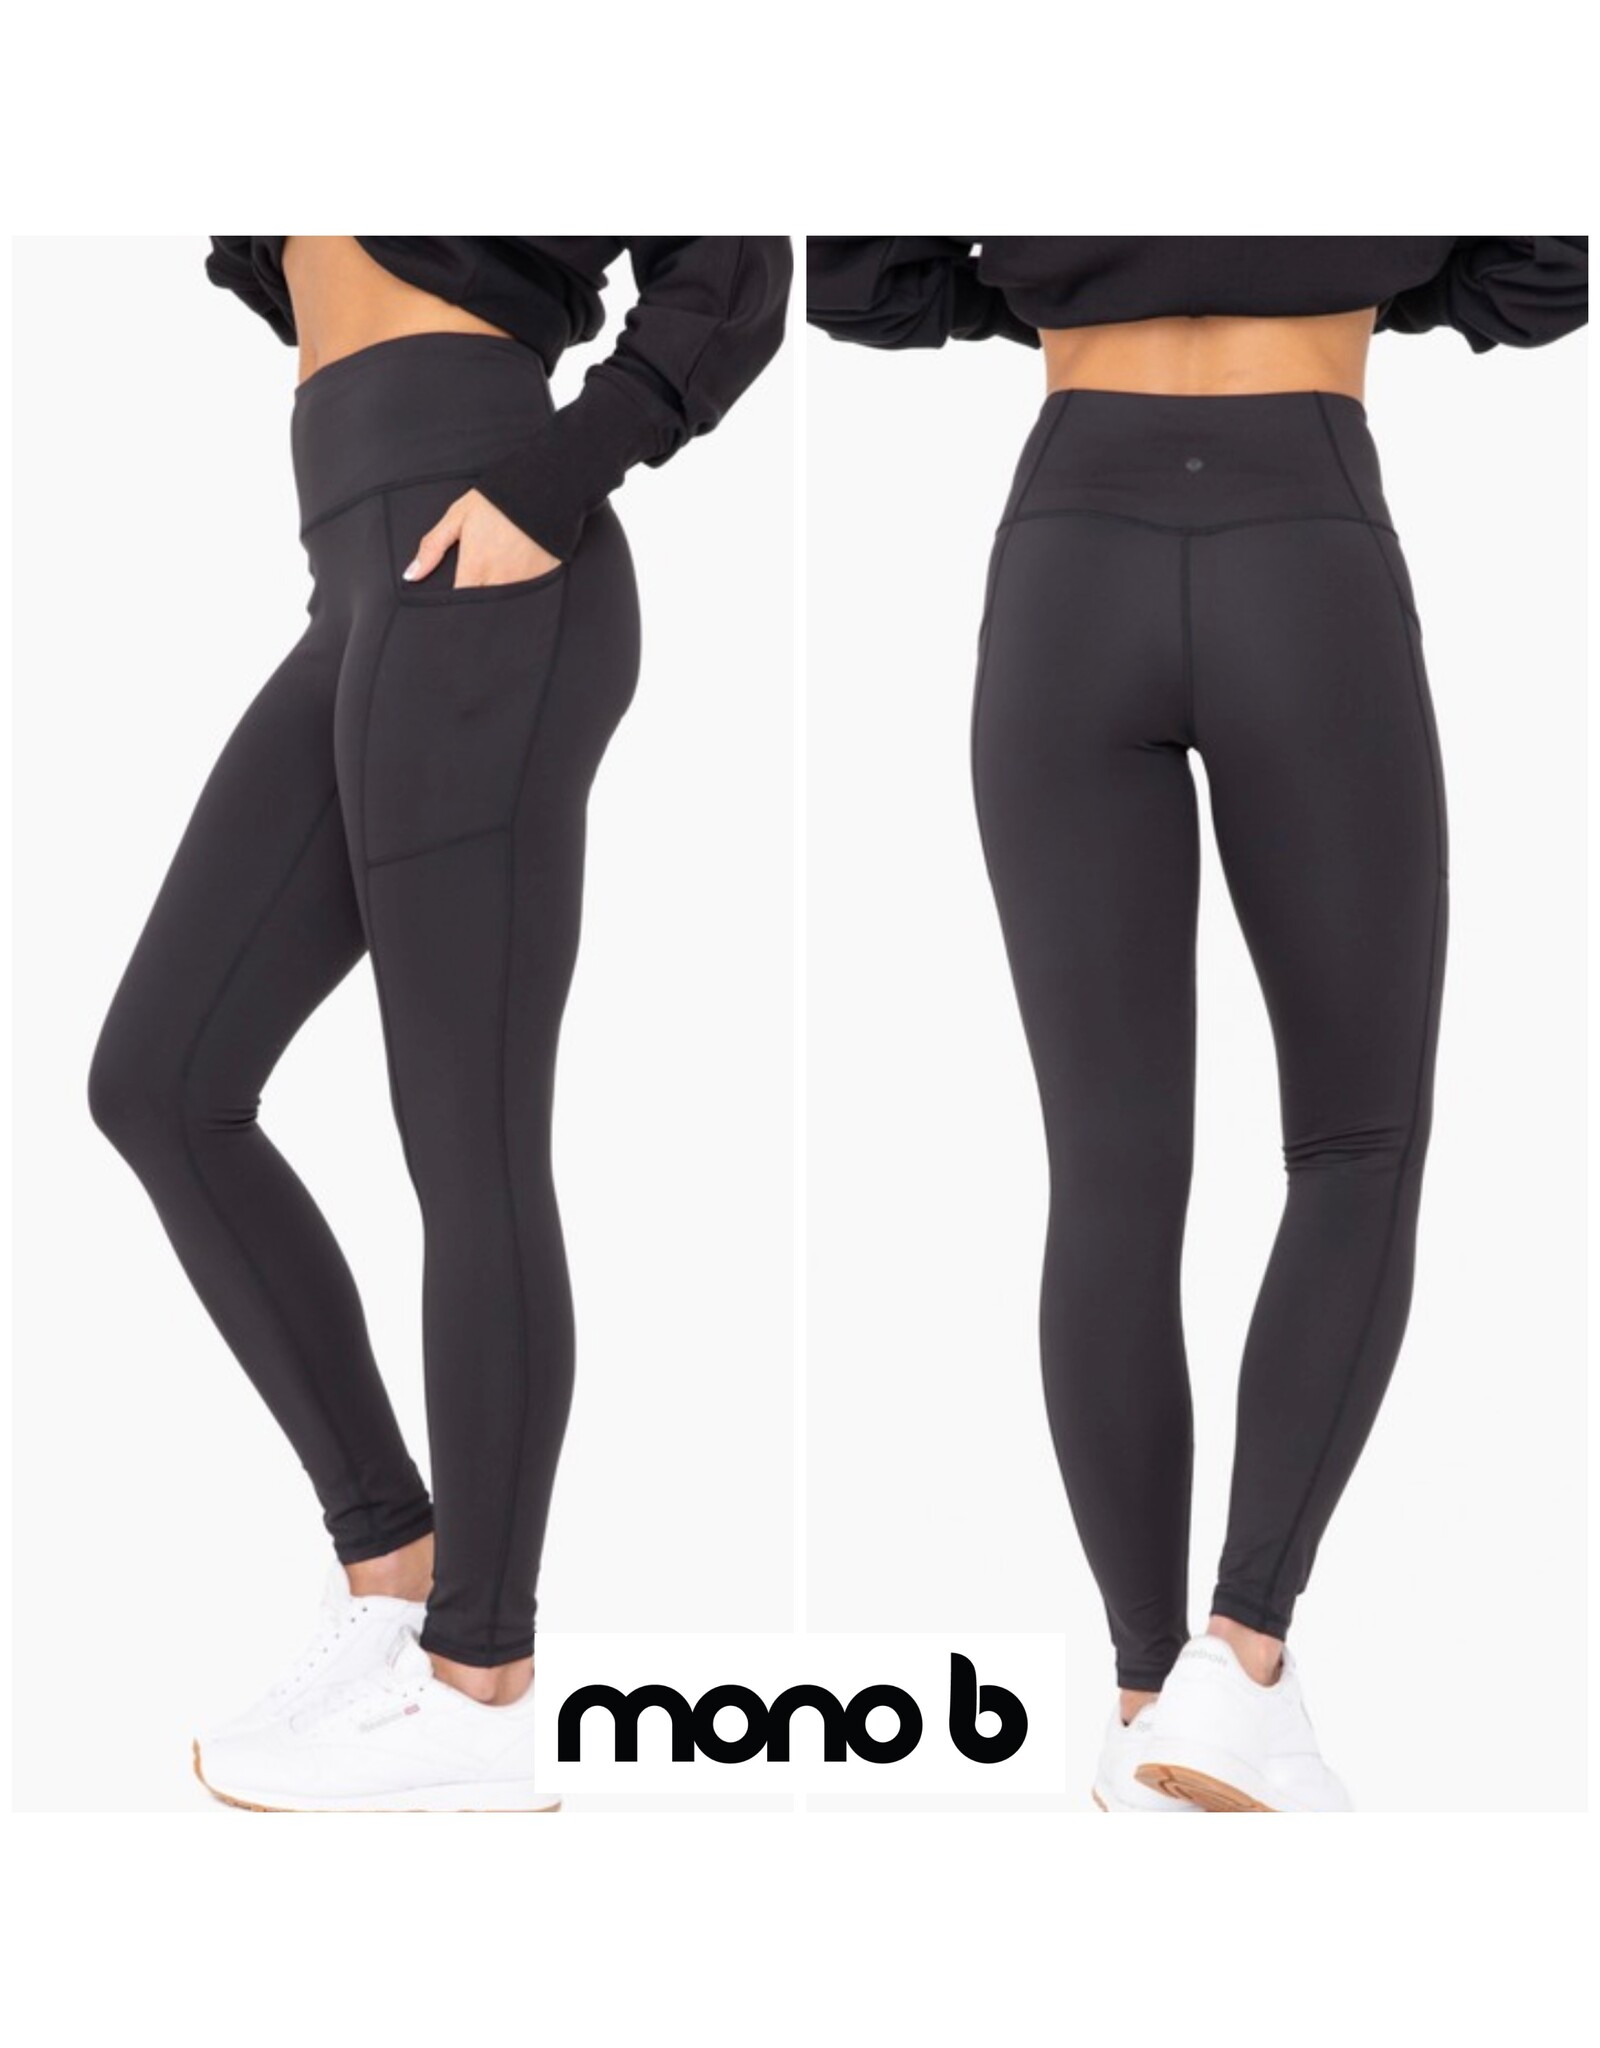 Mono B High Waist Back Pockets Capri Leggings in Small 💗